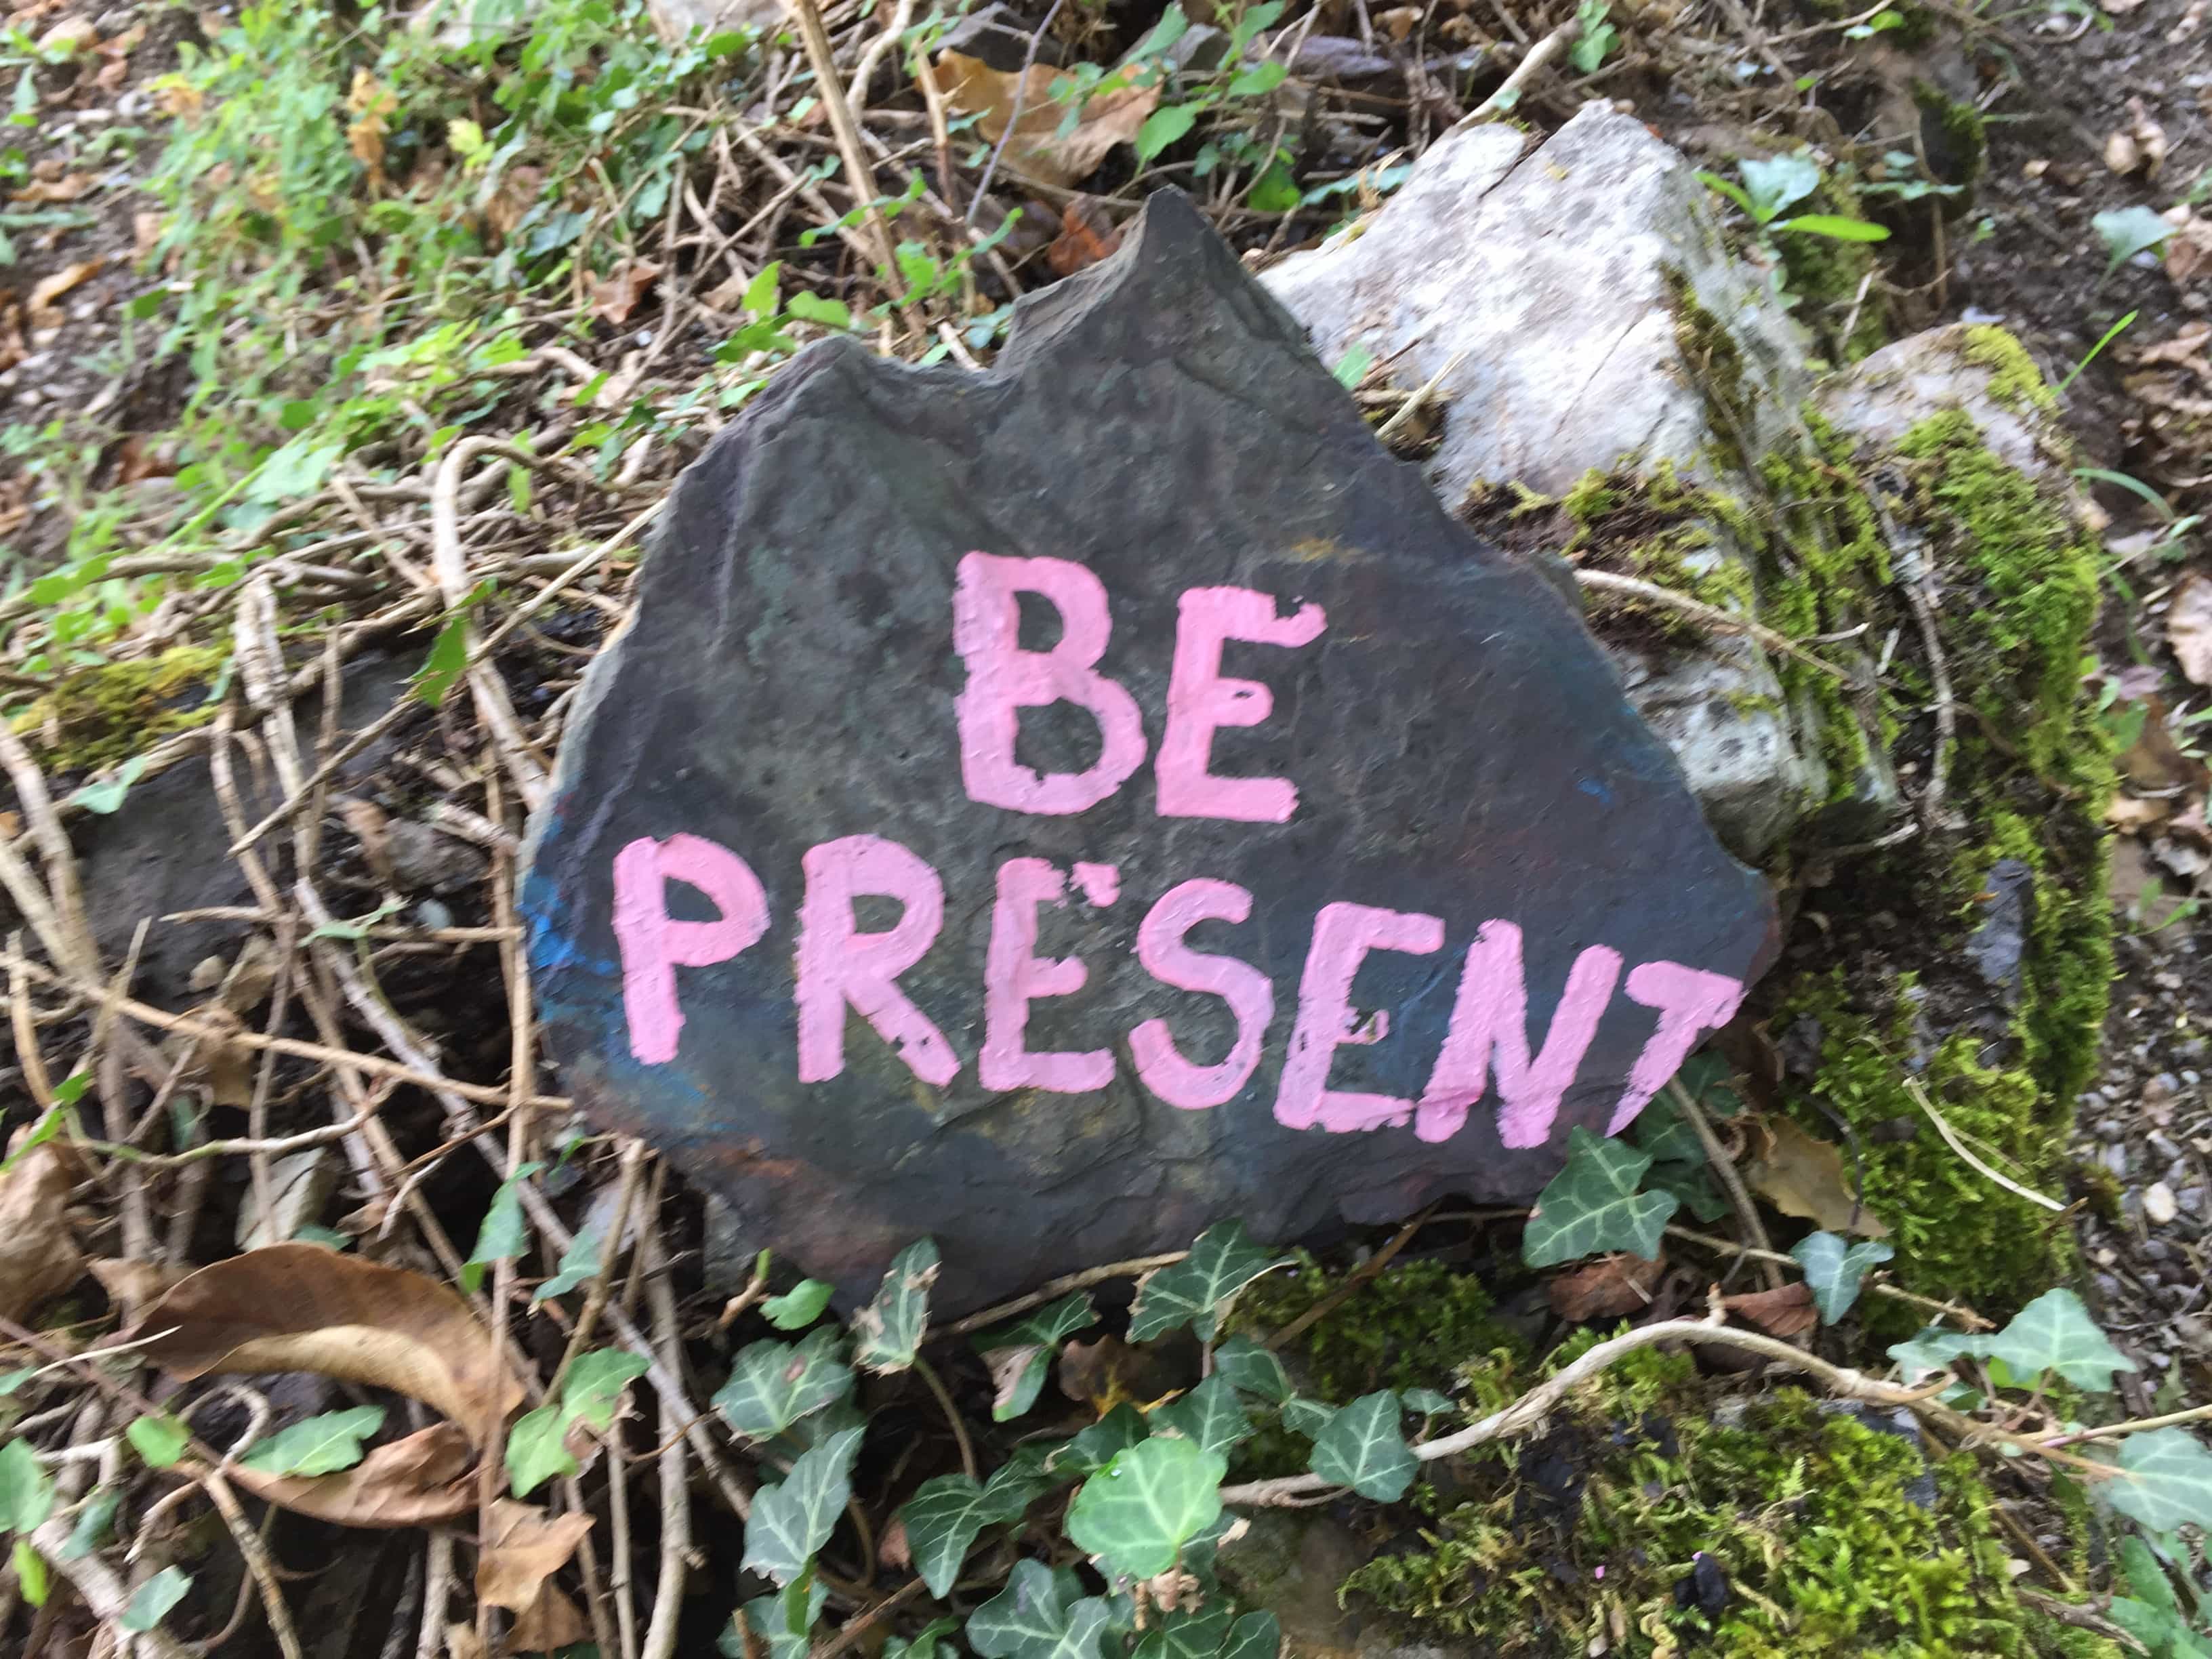 Be present